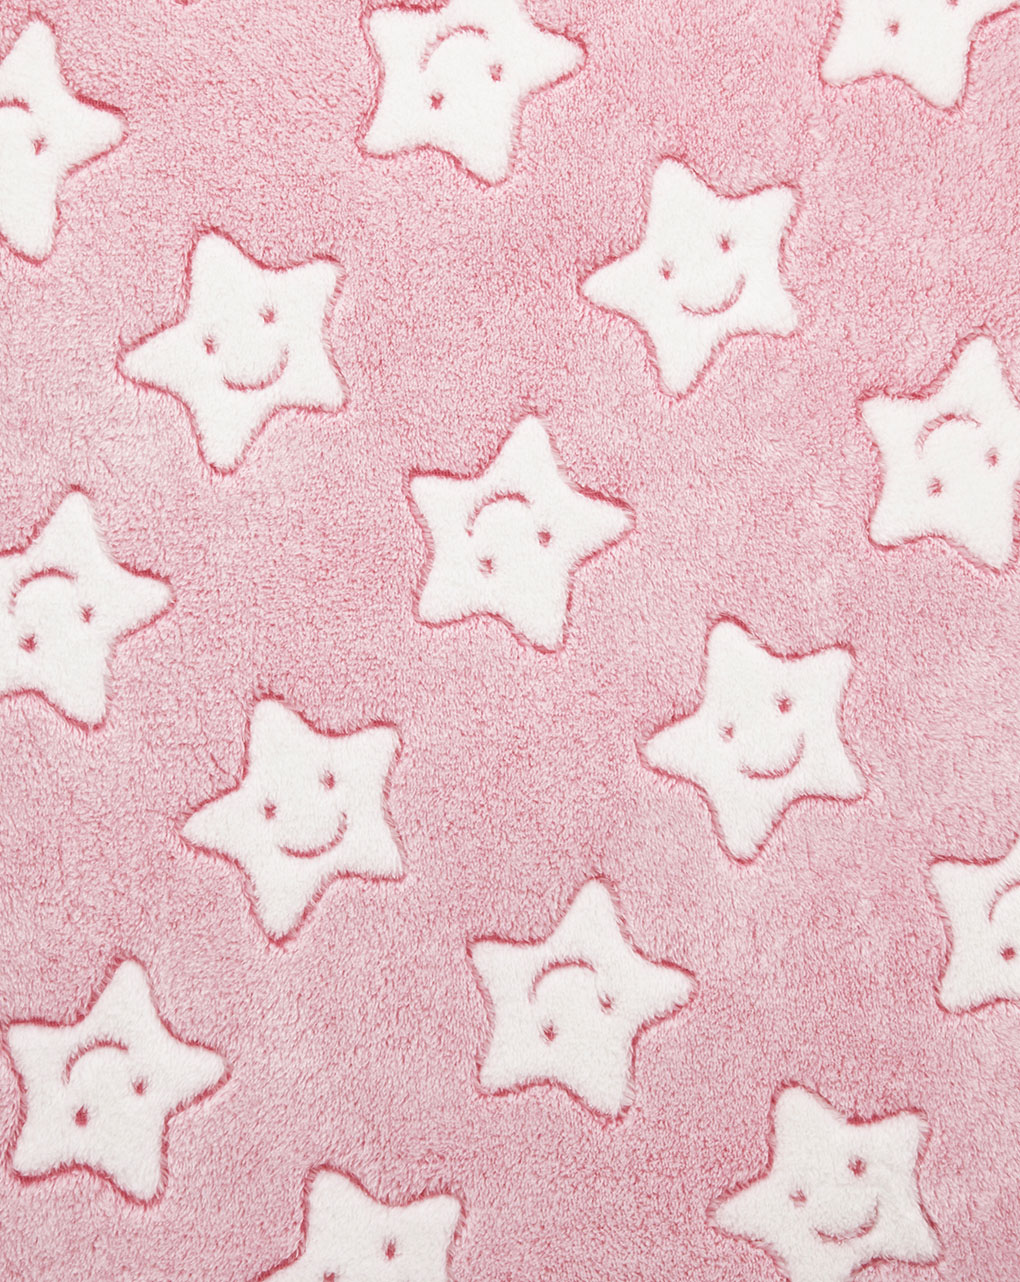 Colcha felpilla minicuna/capazo rosa con estrellas - Prénatal